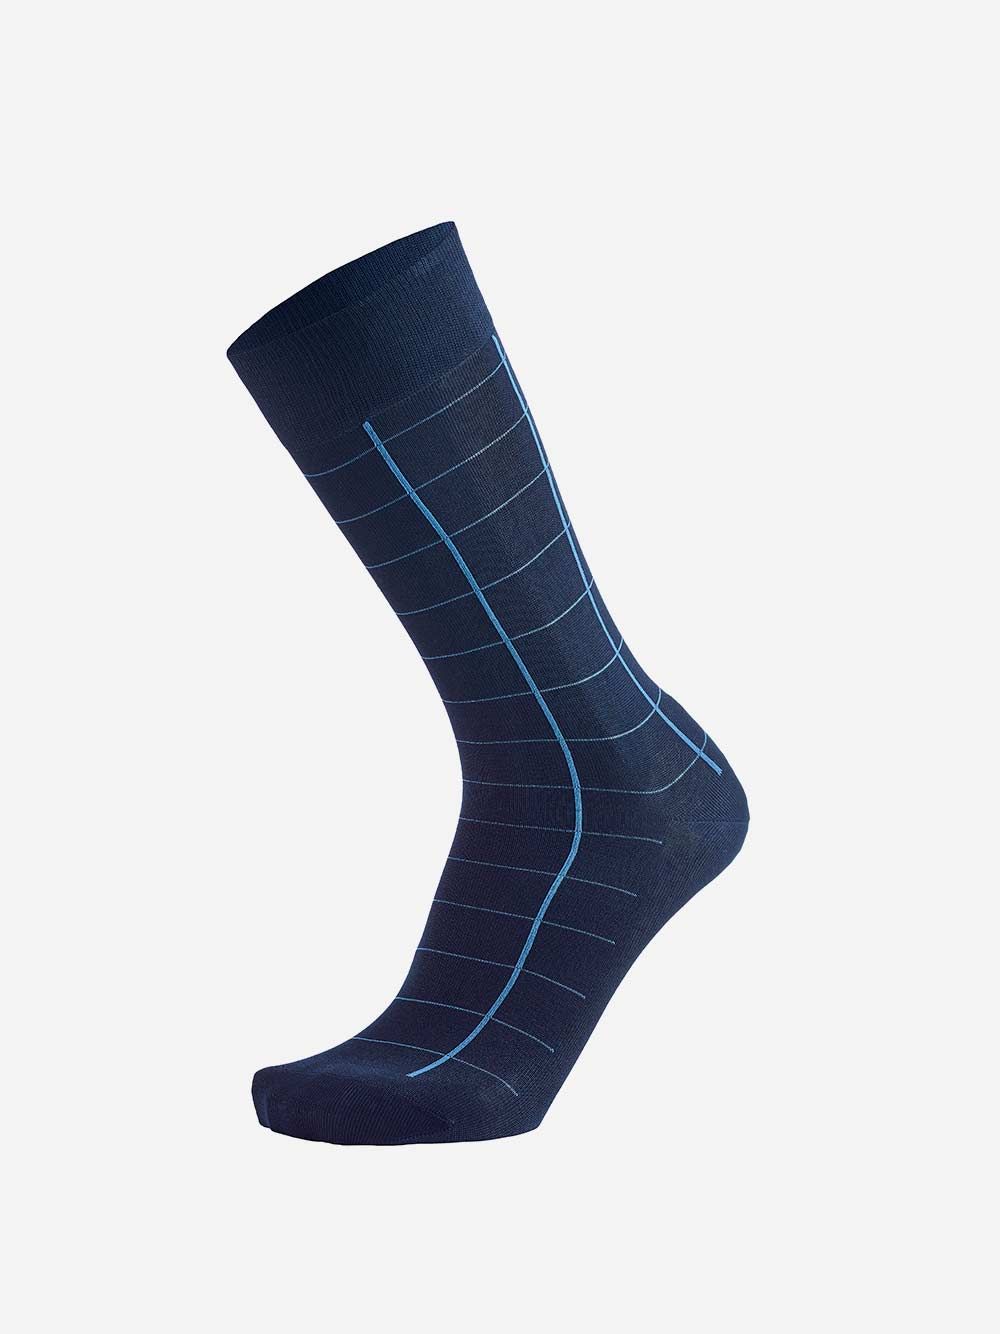 Striped Blue Navy Socks | Westmister